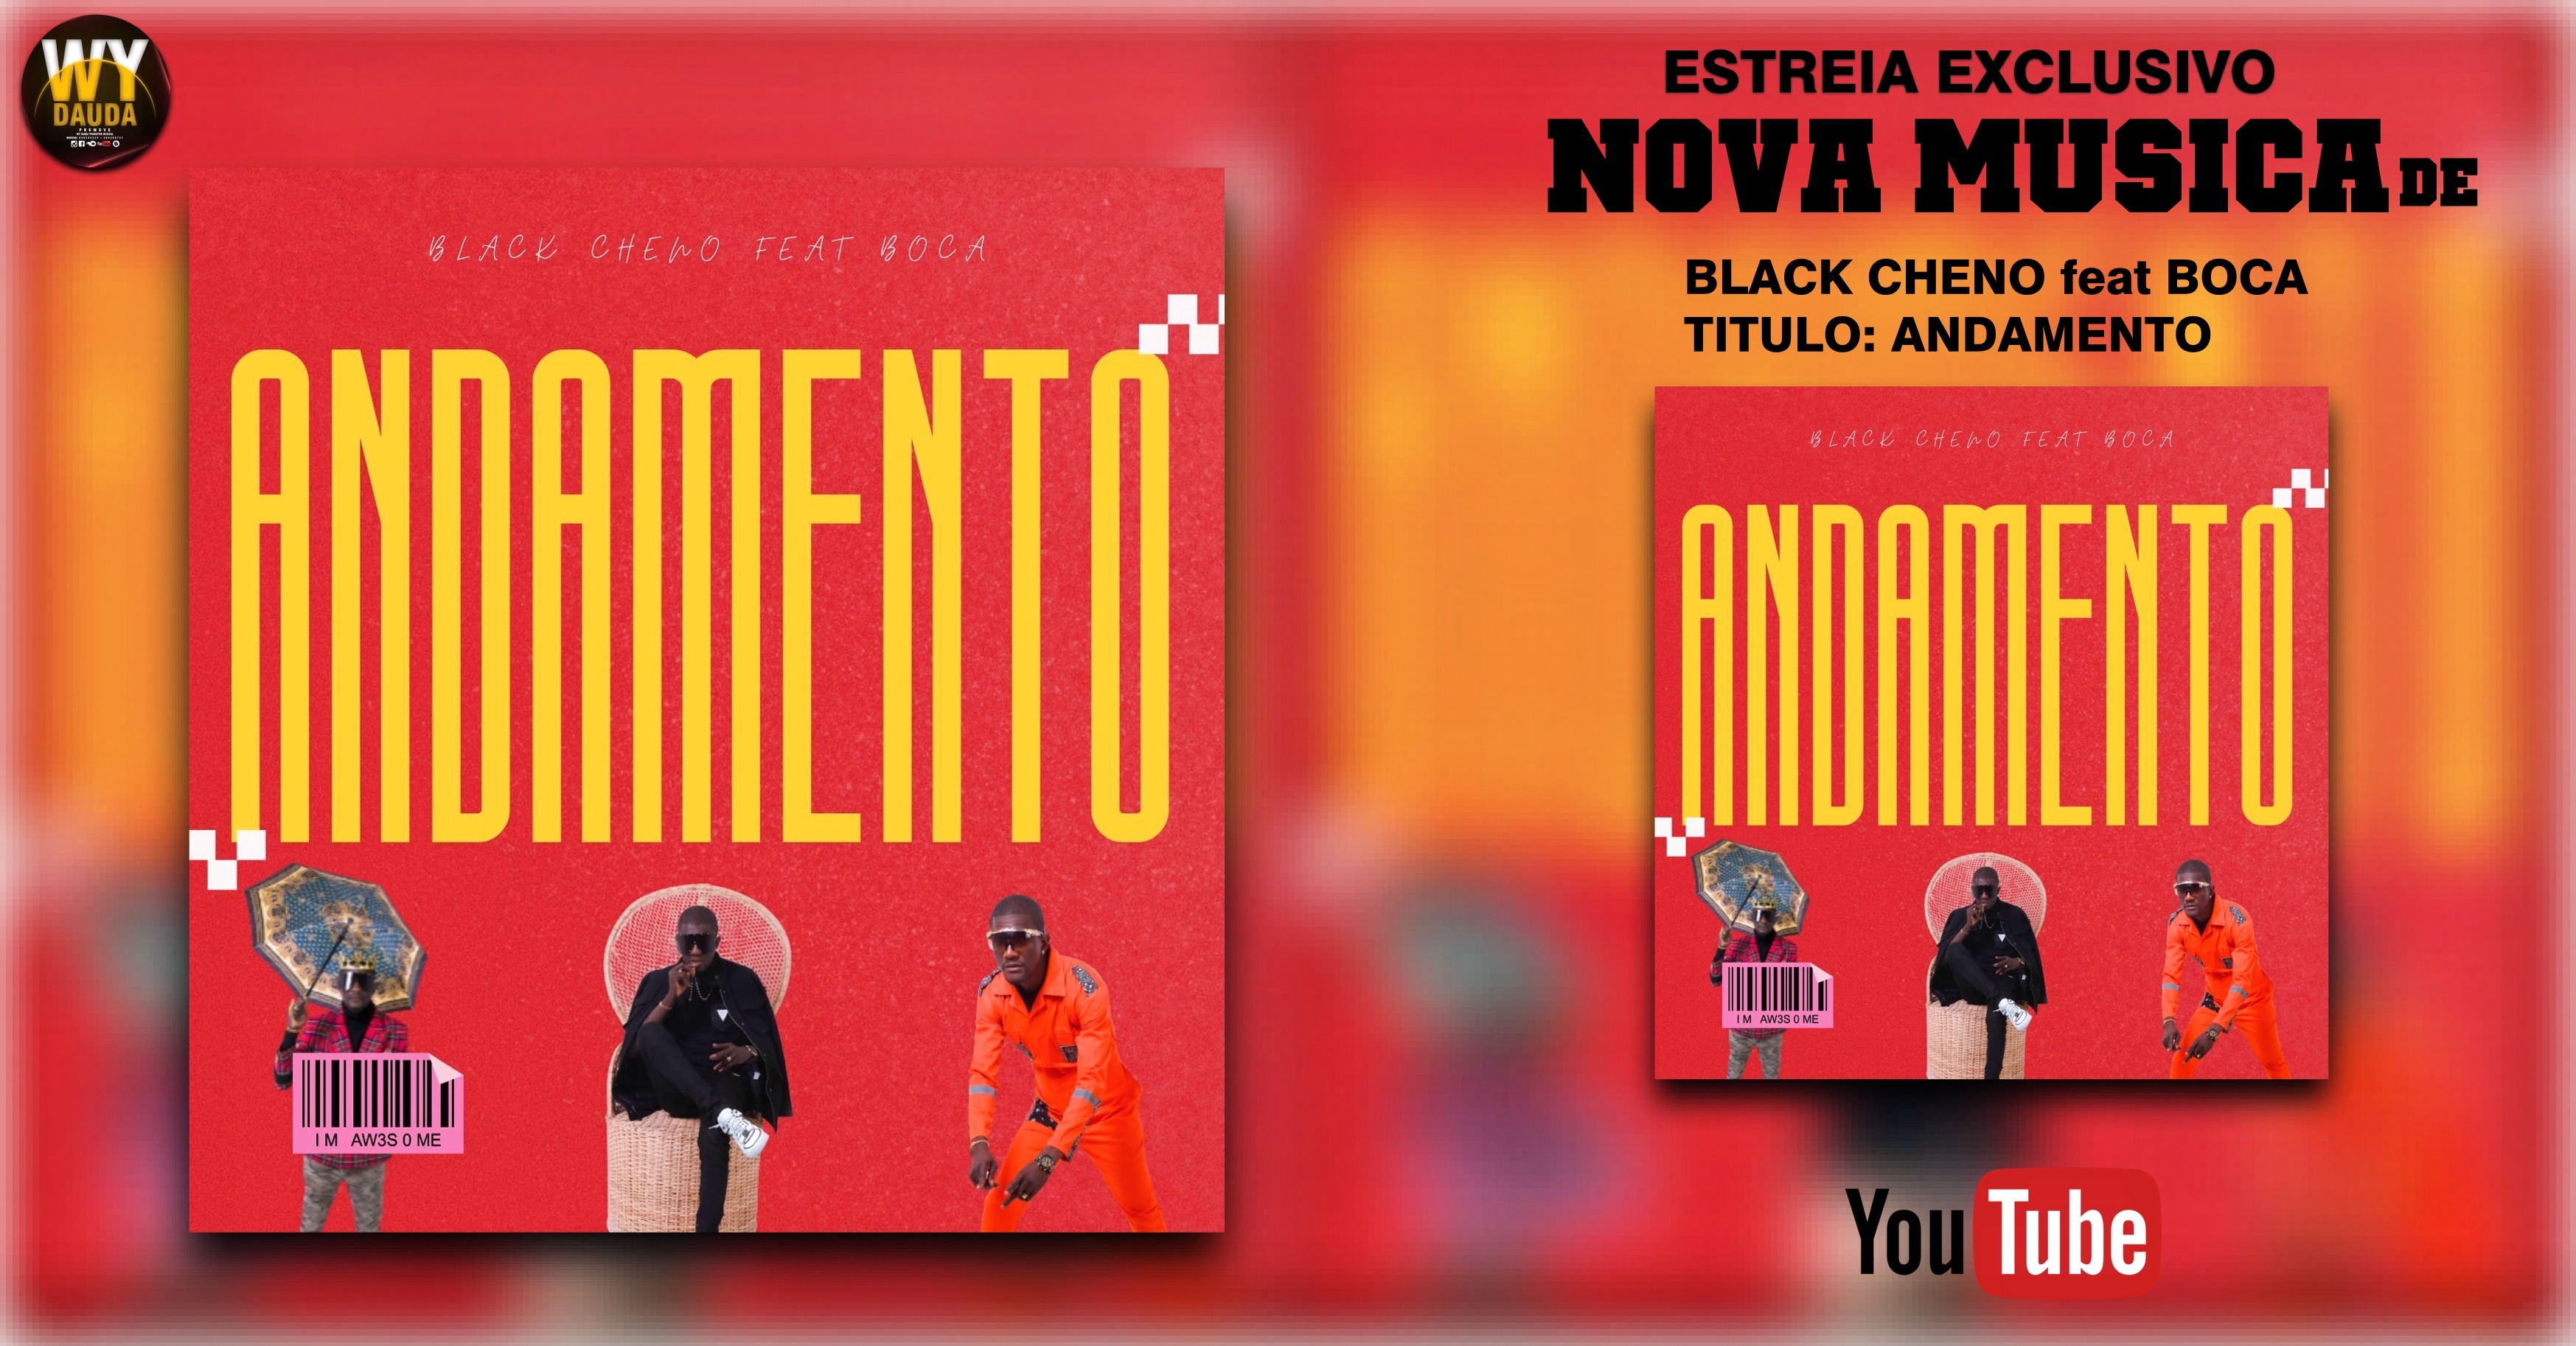 Black Chano feat Boca - Andamento